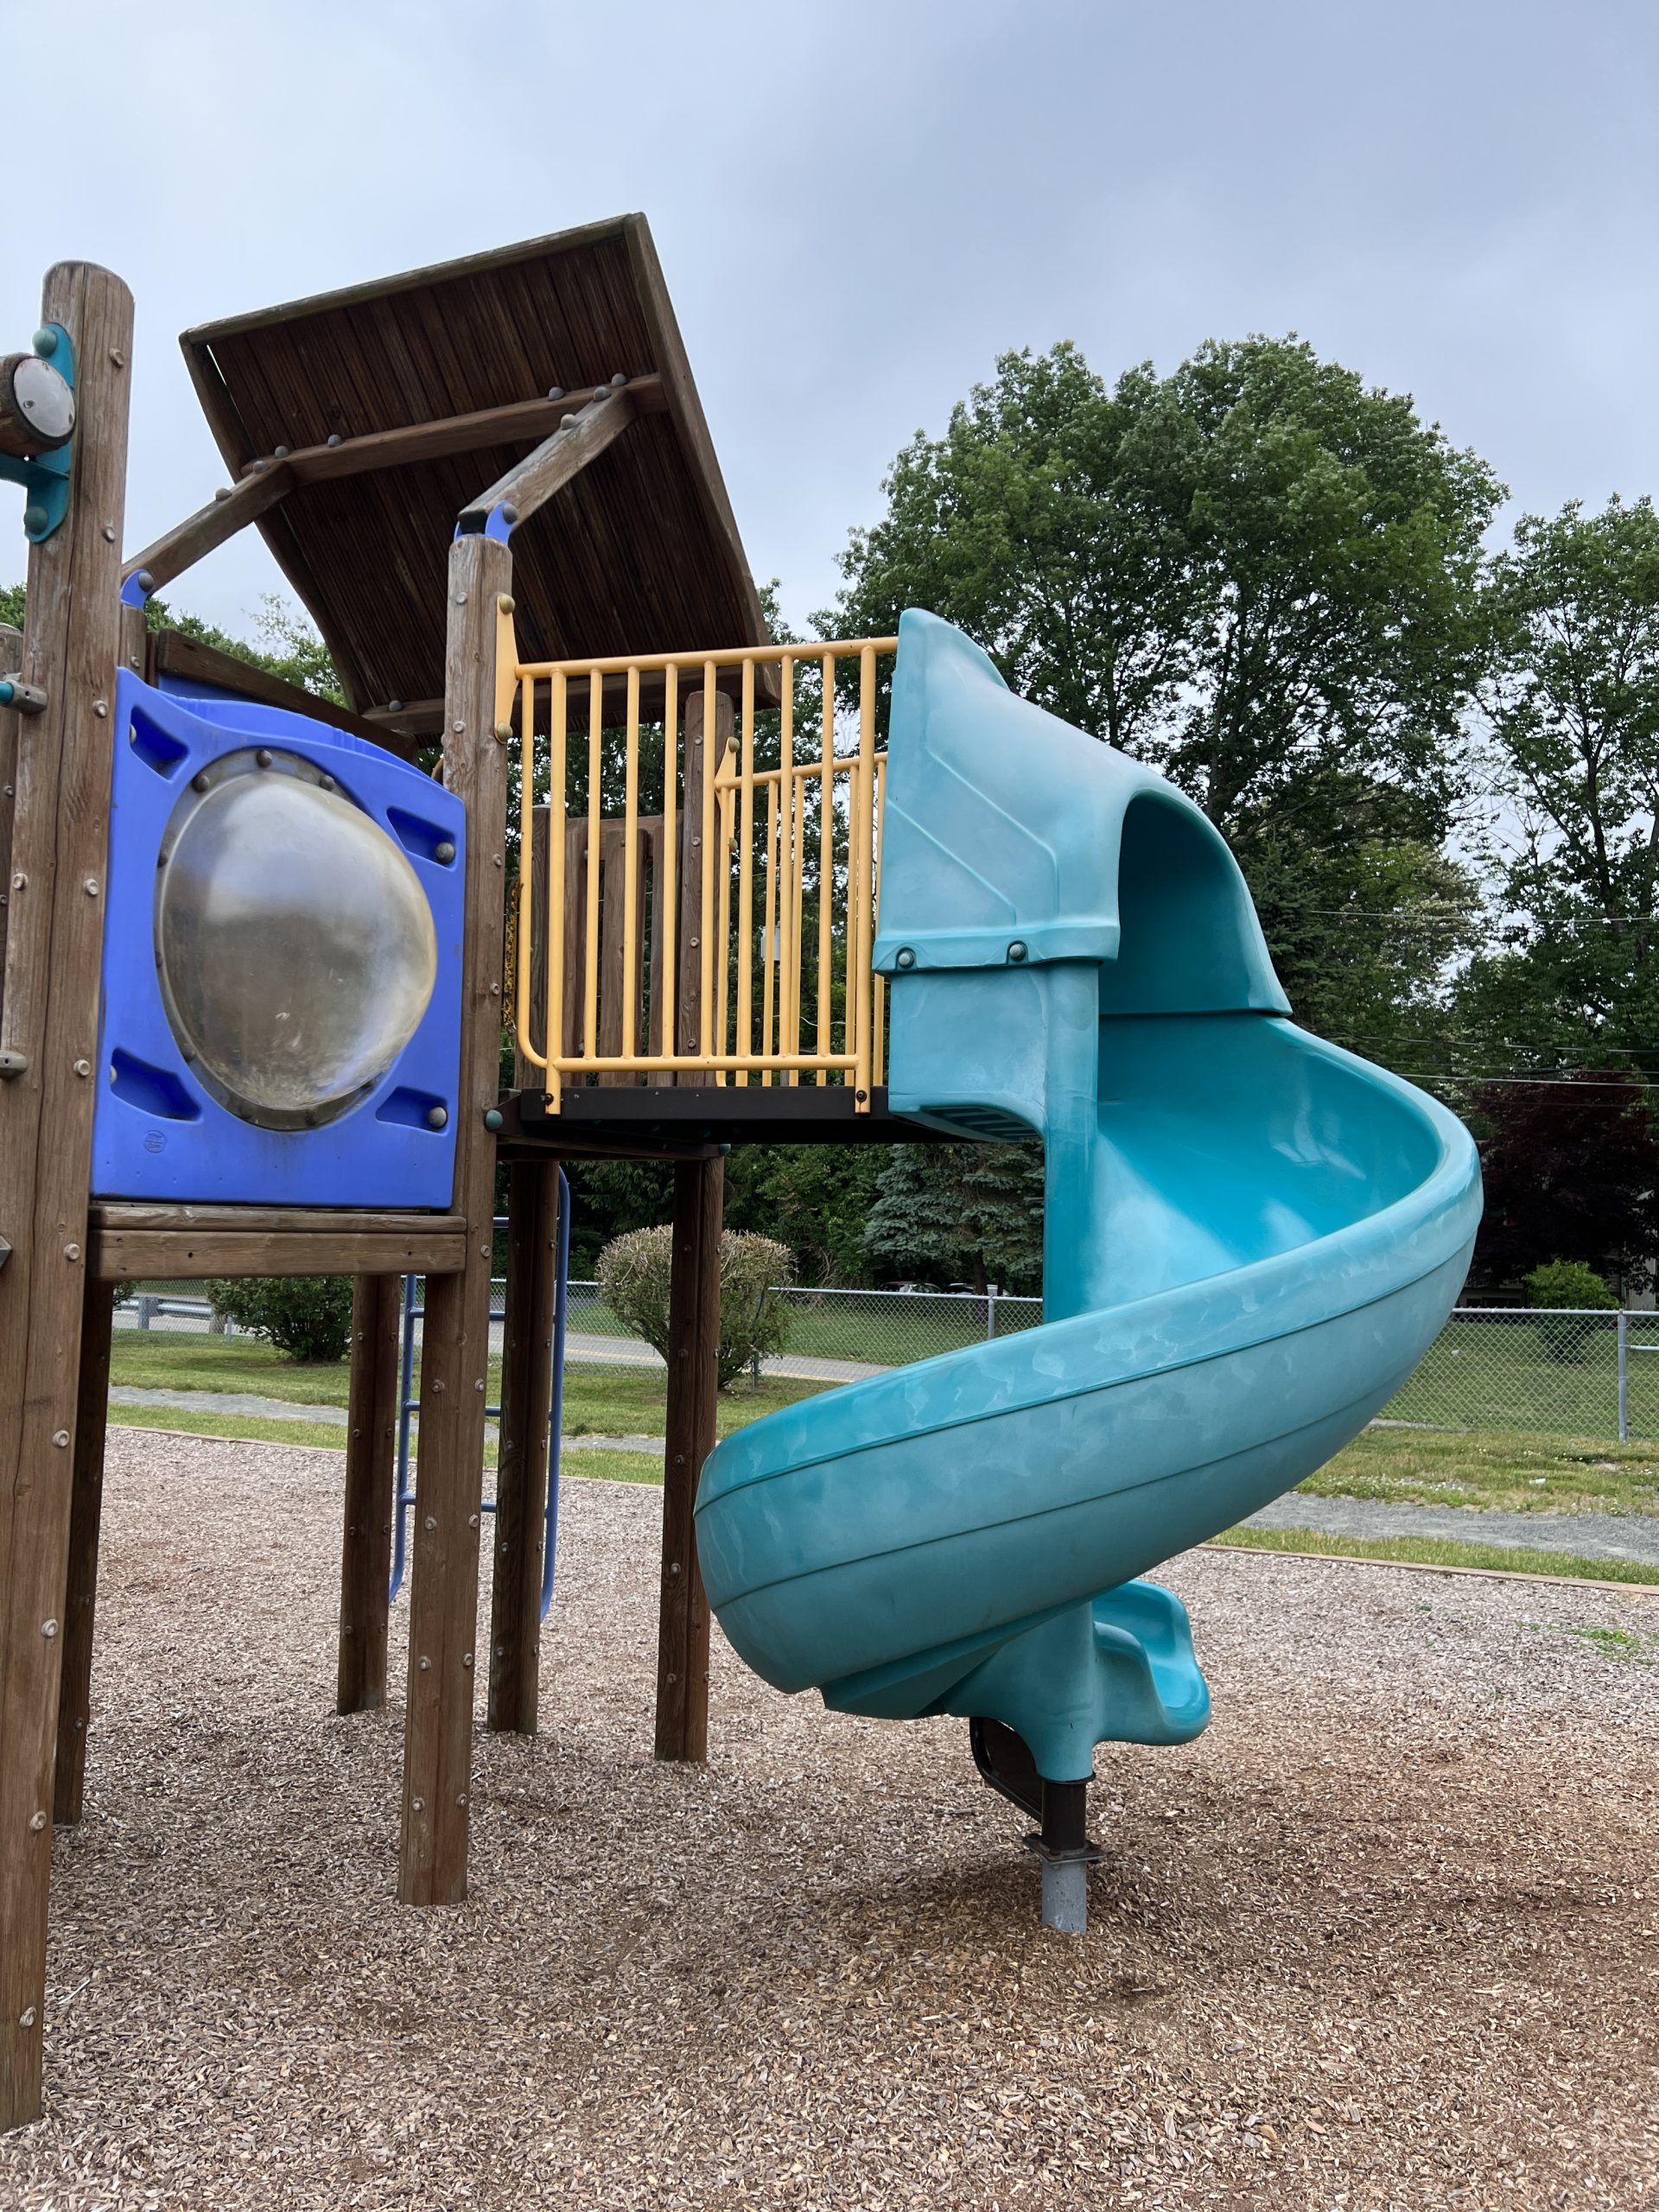 Green twisting slide at C O Johnson Park Playground in Byram Township NJ